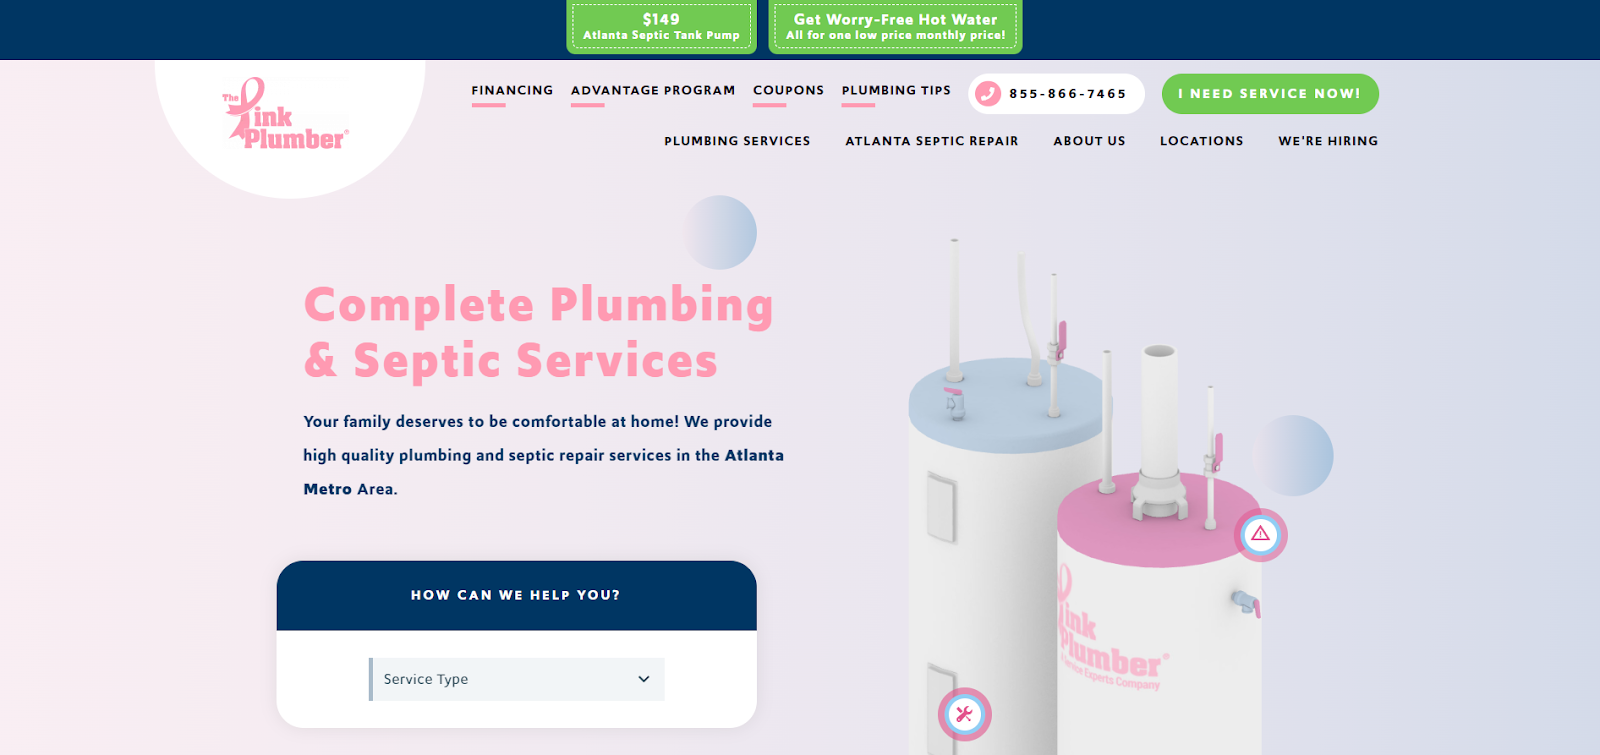 The Pink Plumber website